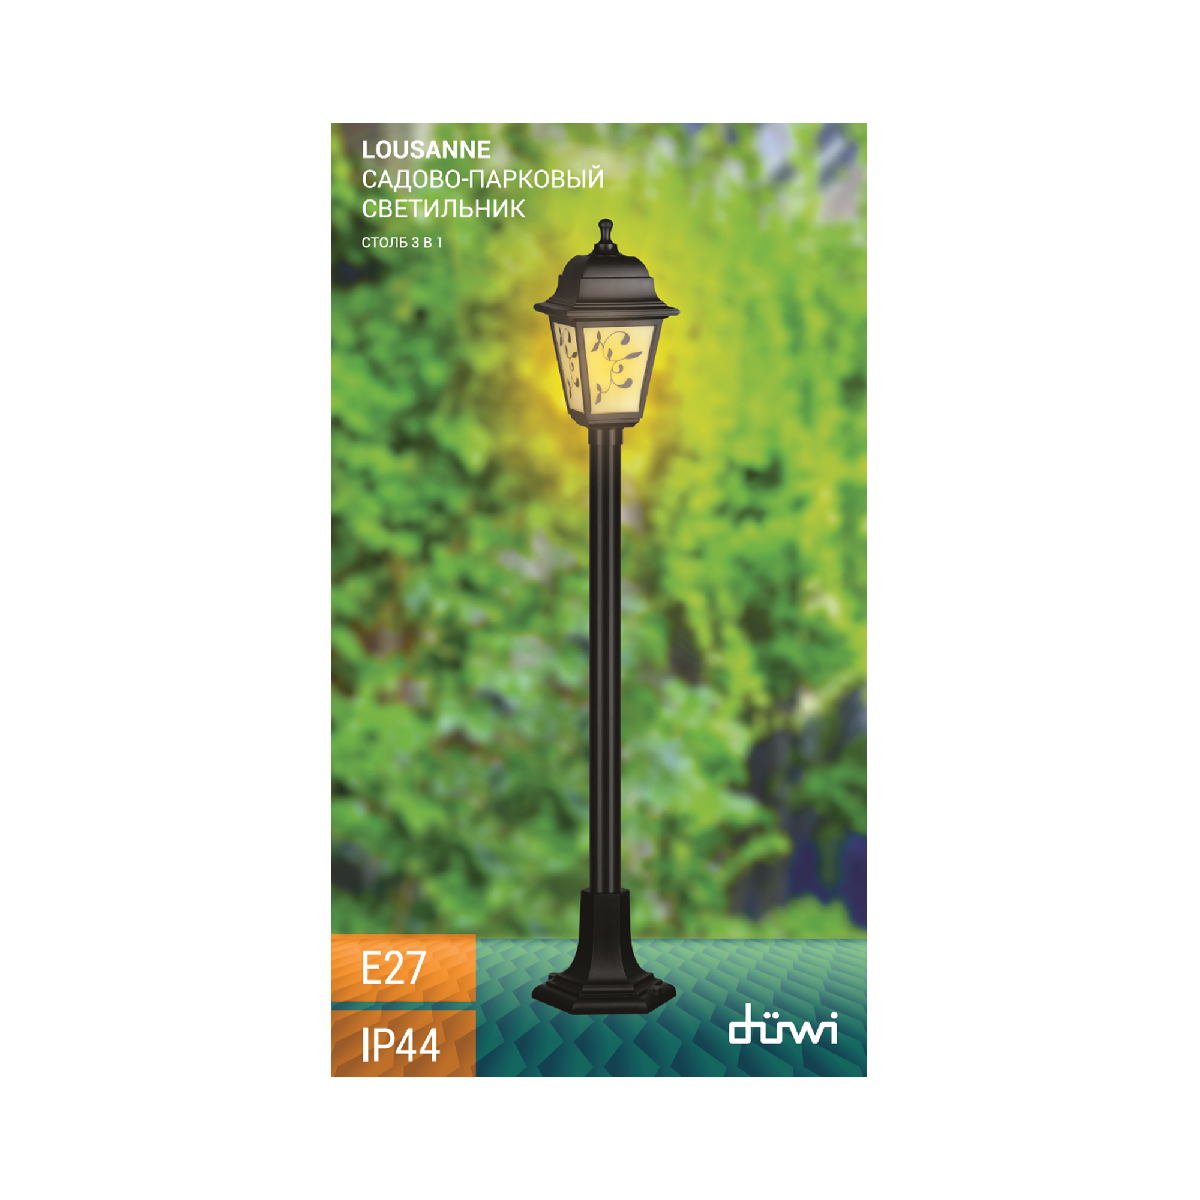 Ландшафтный светильник Duwi Lousanne 24146 1